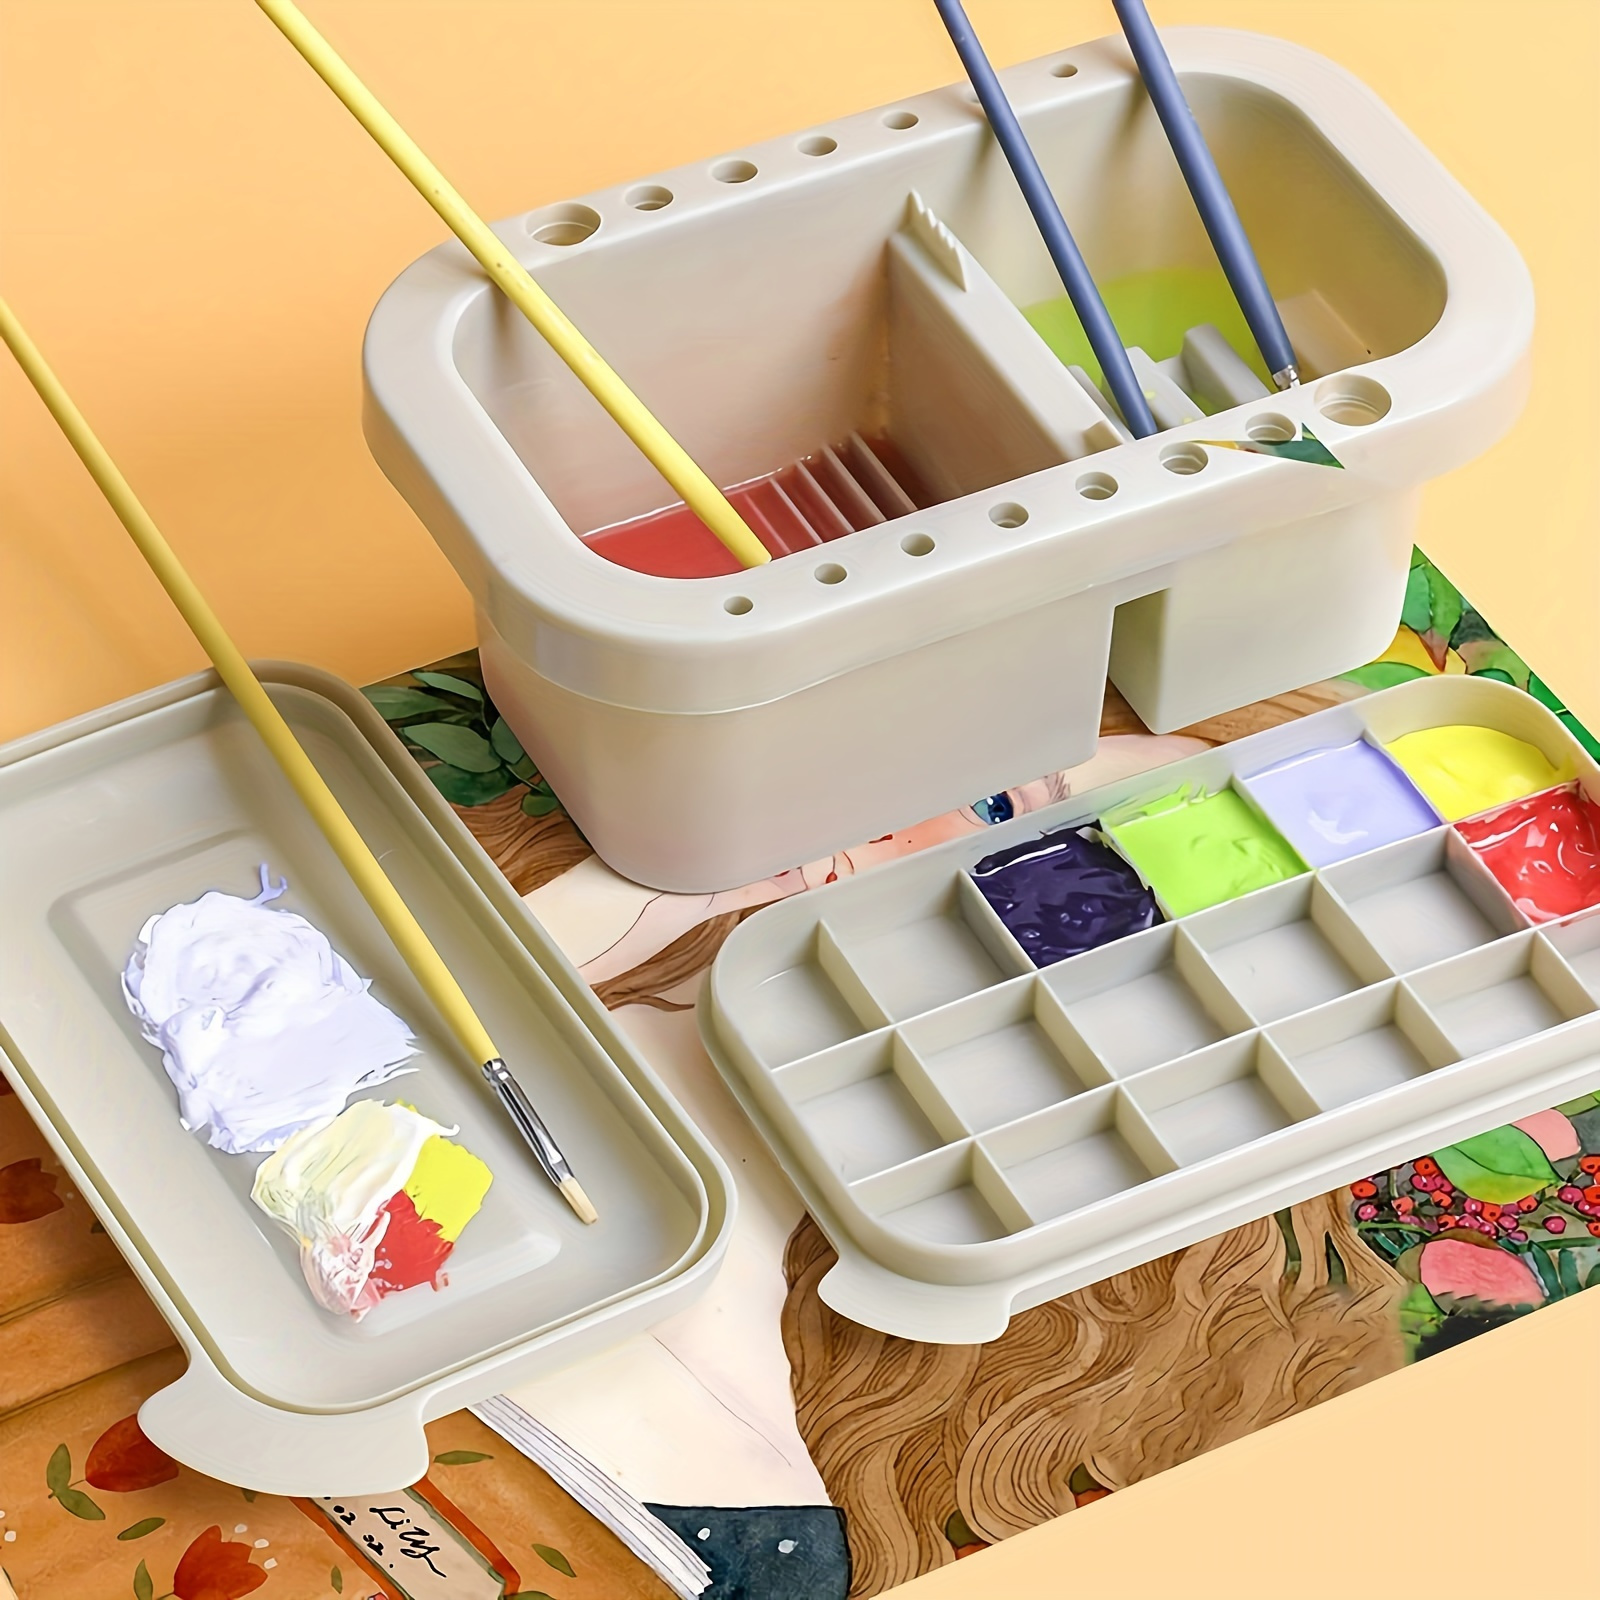 Watercolour brush care: How to clean & repair brushes - Emily